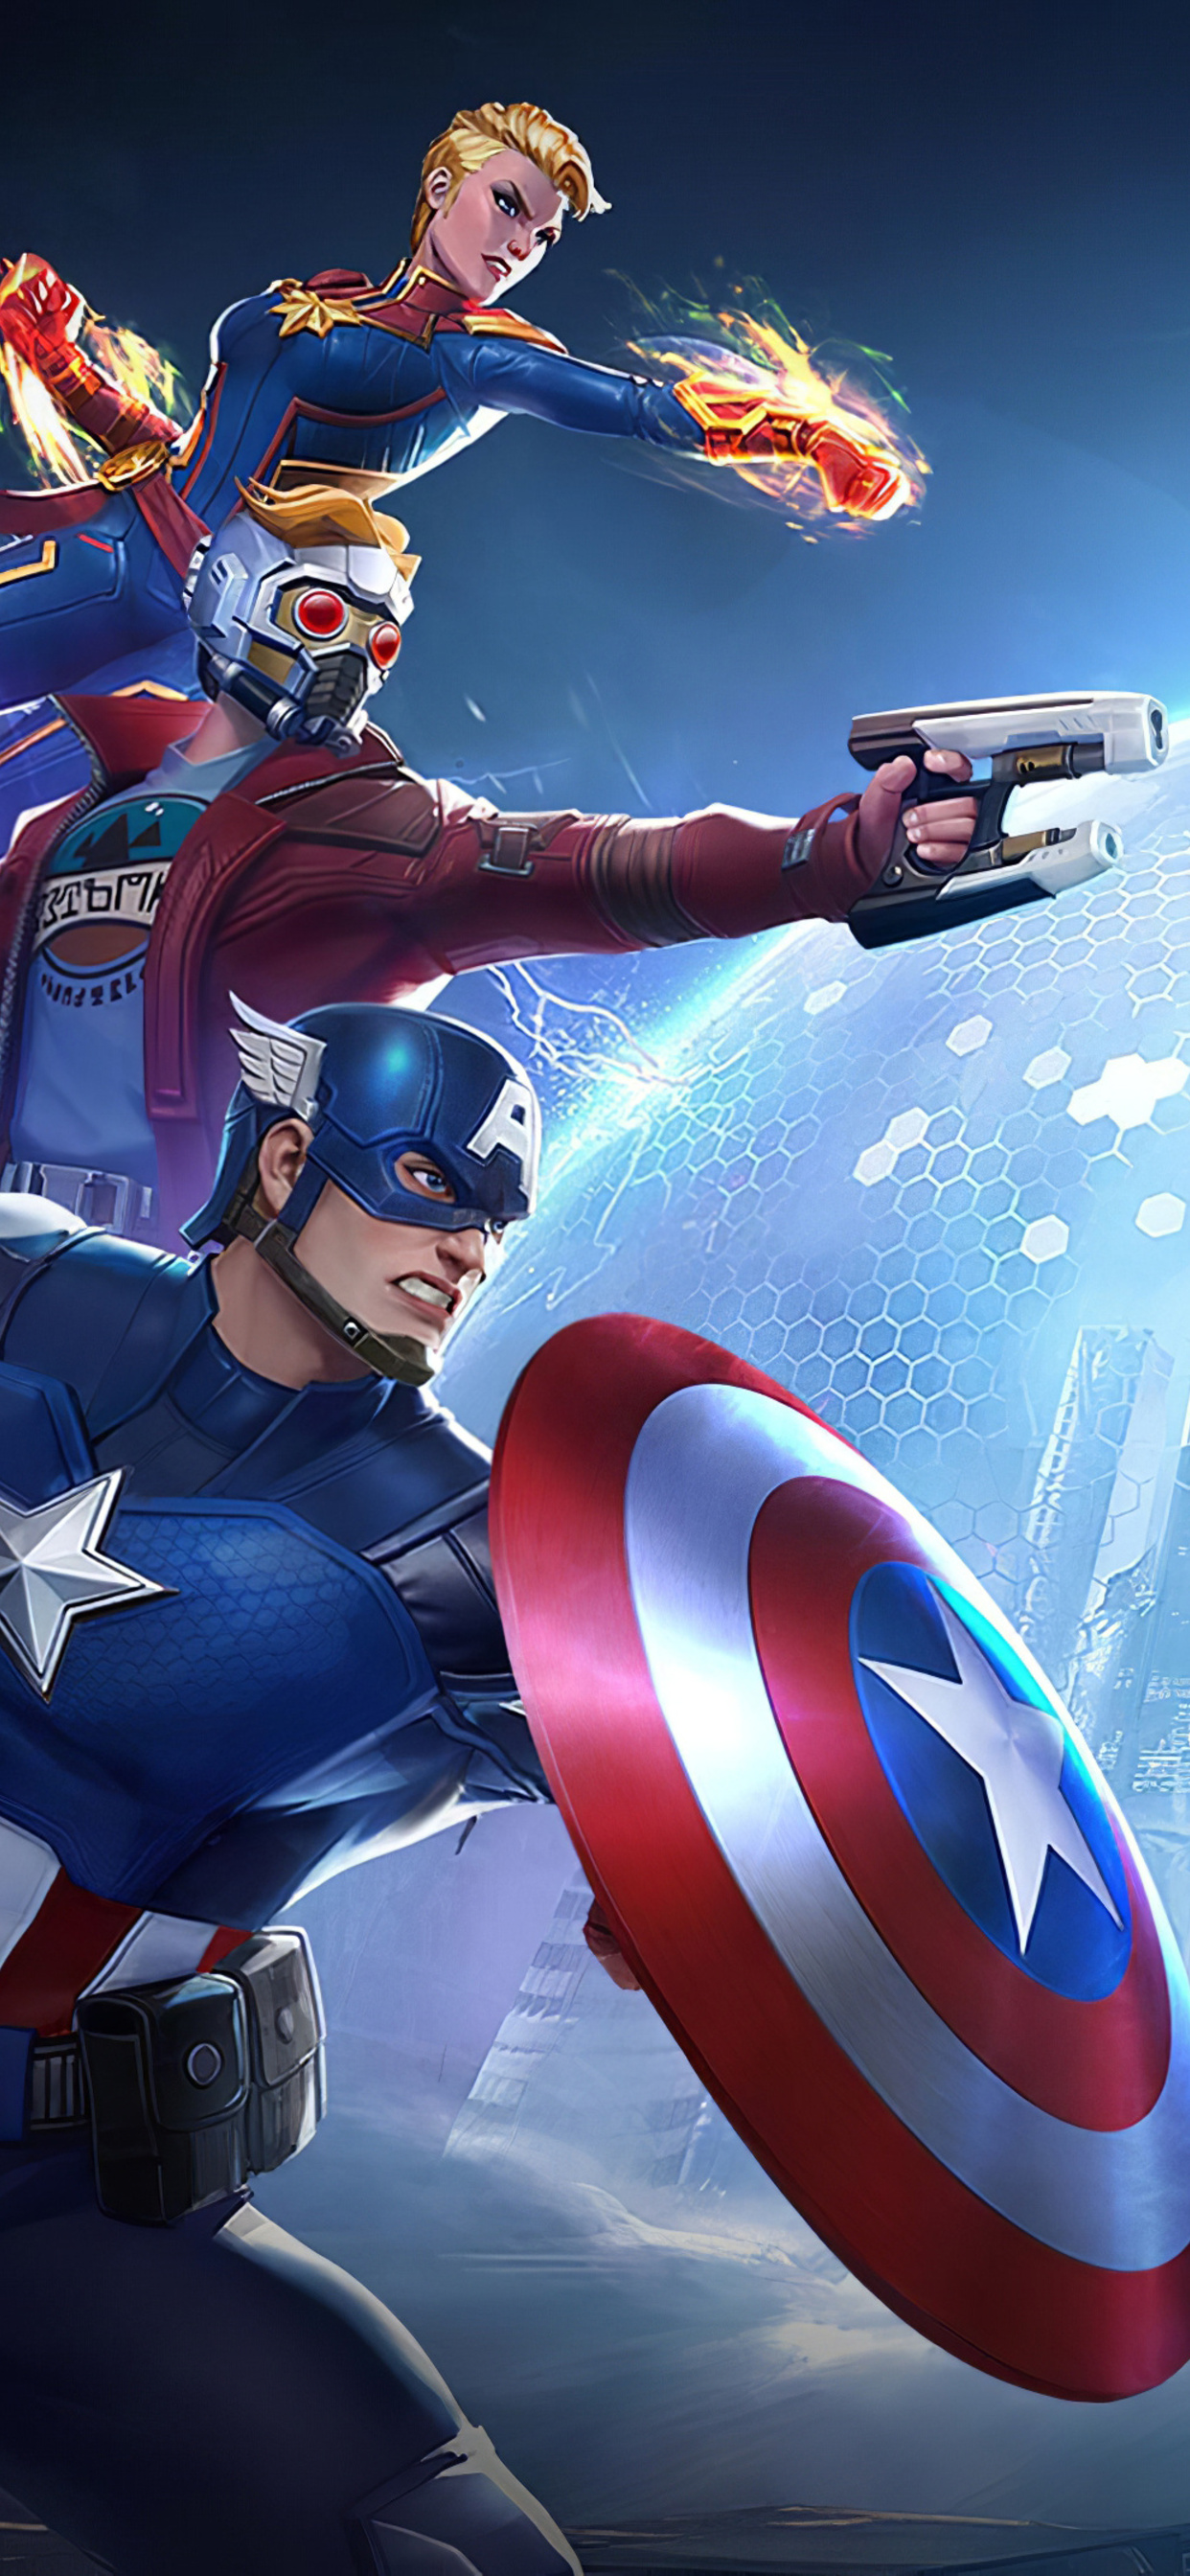 Iphone Avengers Wallpaper Cartoon - Wallbase